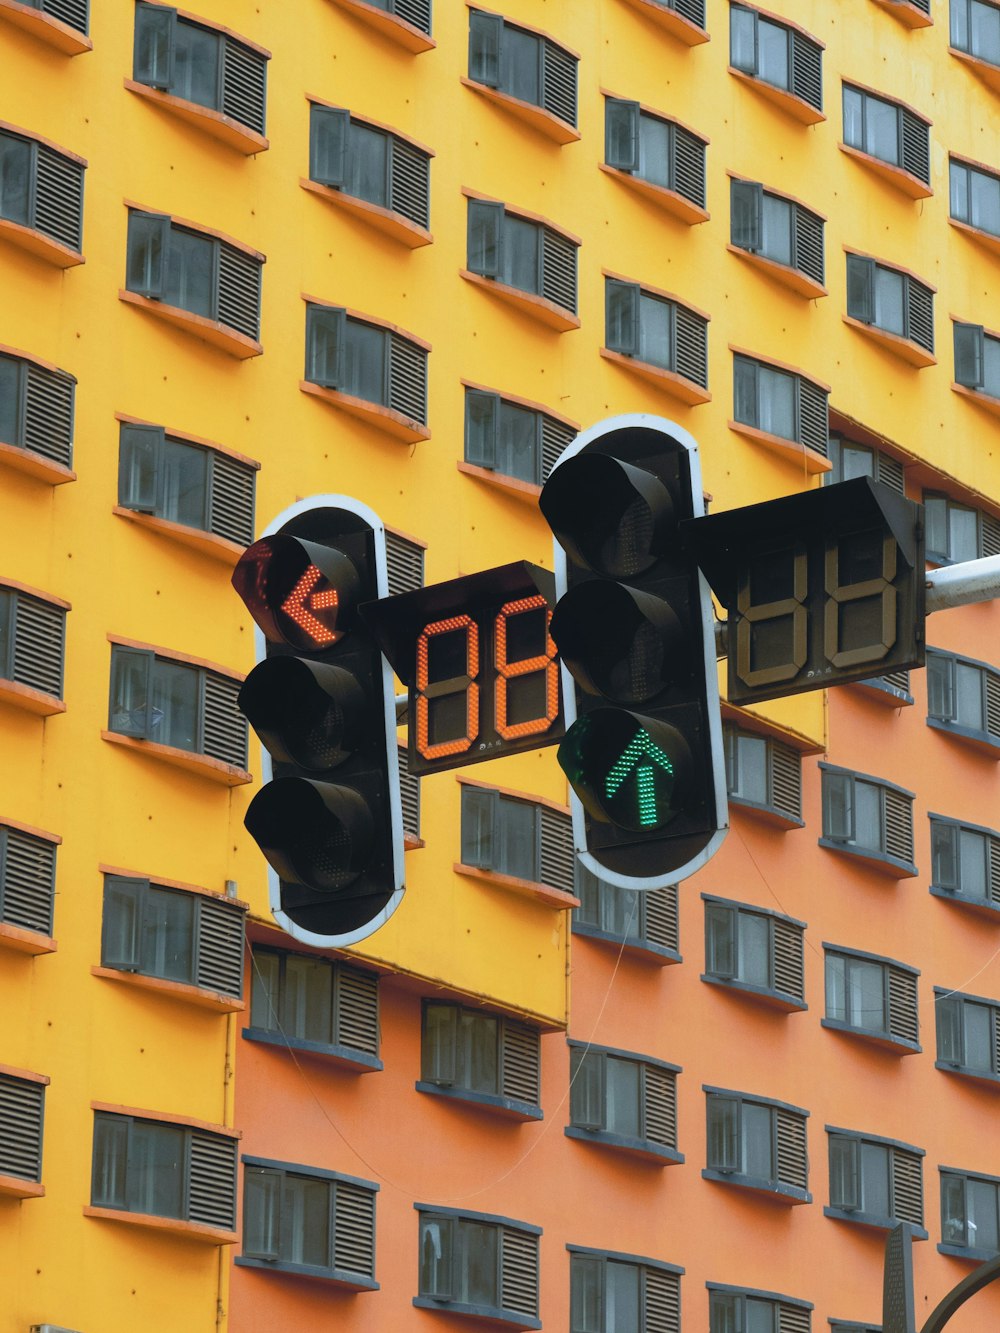 two traffic lights